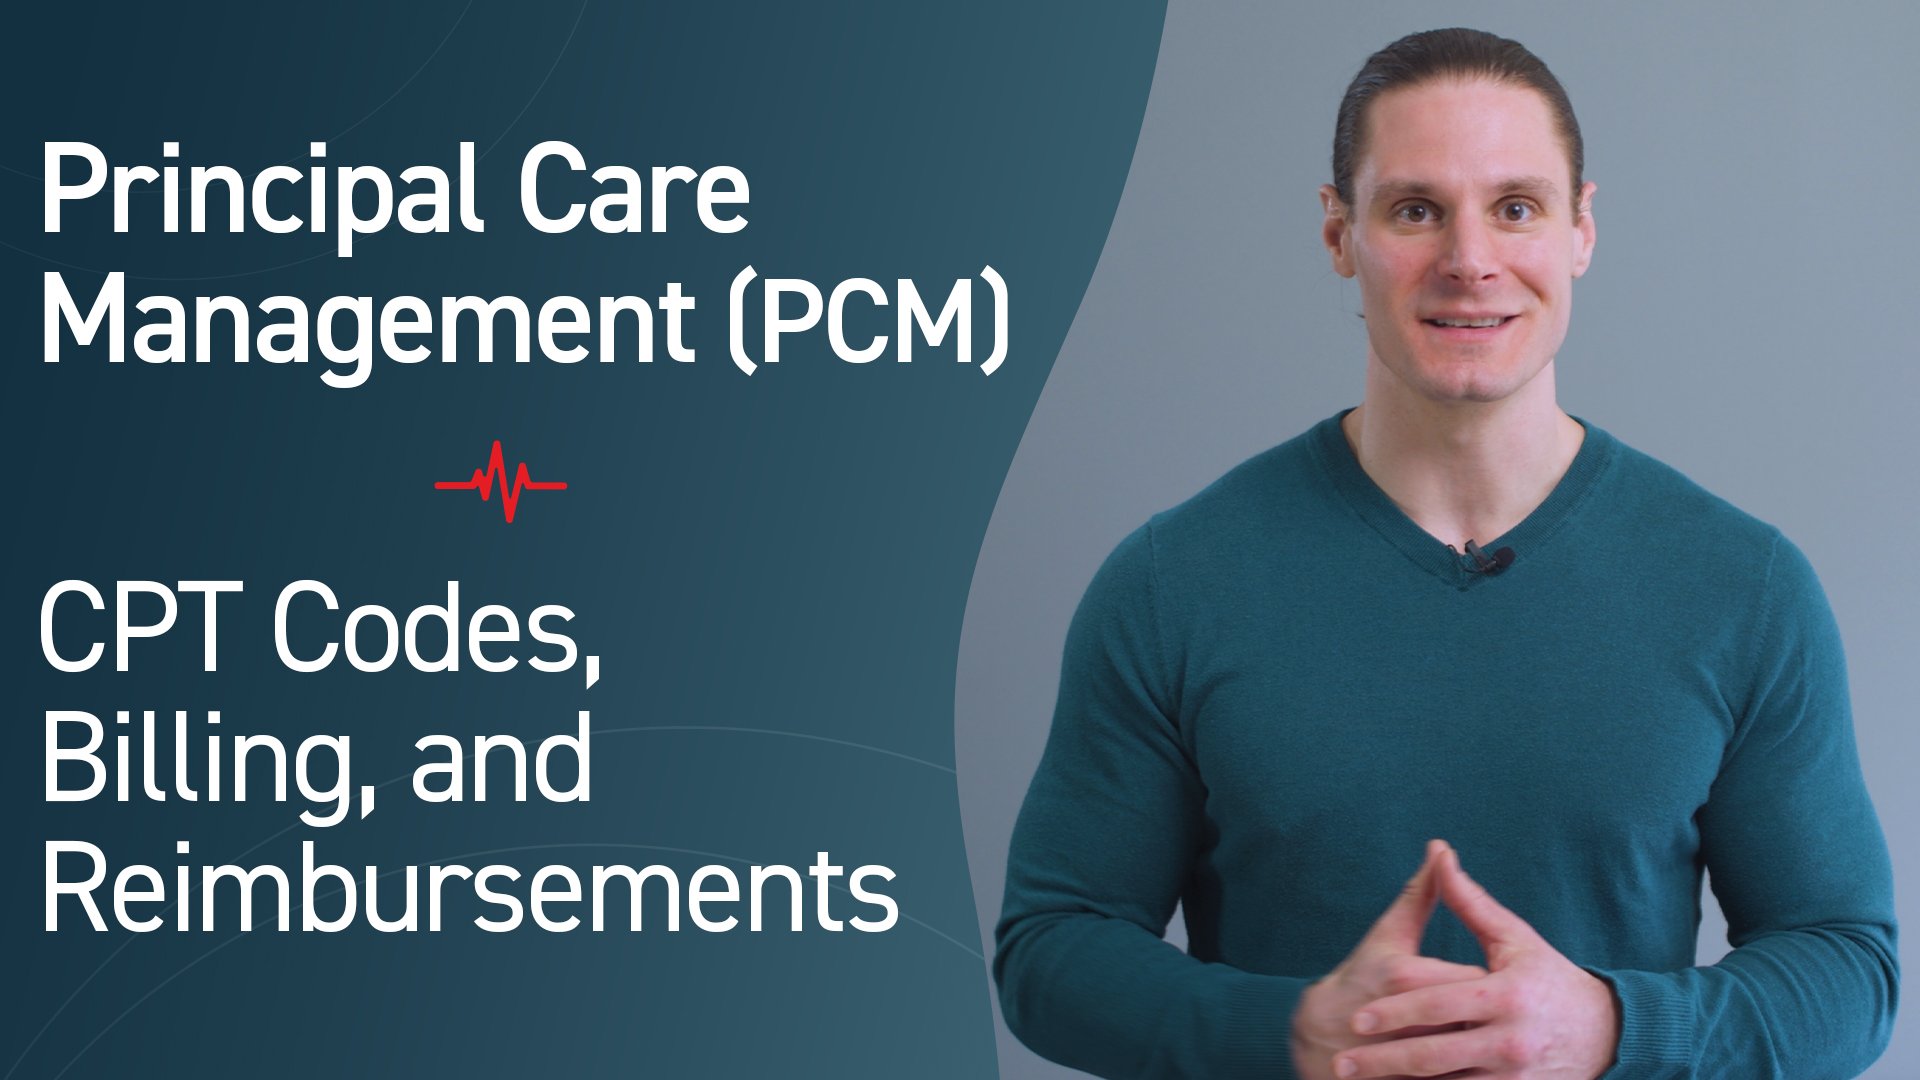 Principal Care Management (PCM): CPT Codes, Billing, and Reimbursements